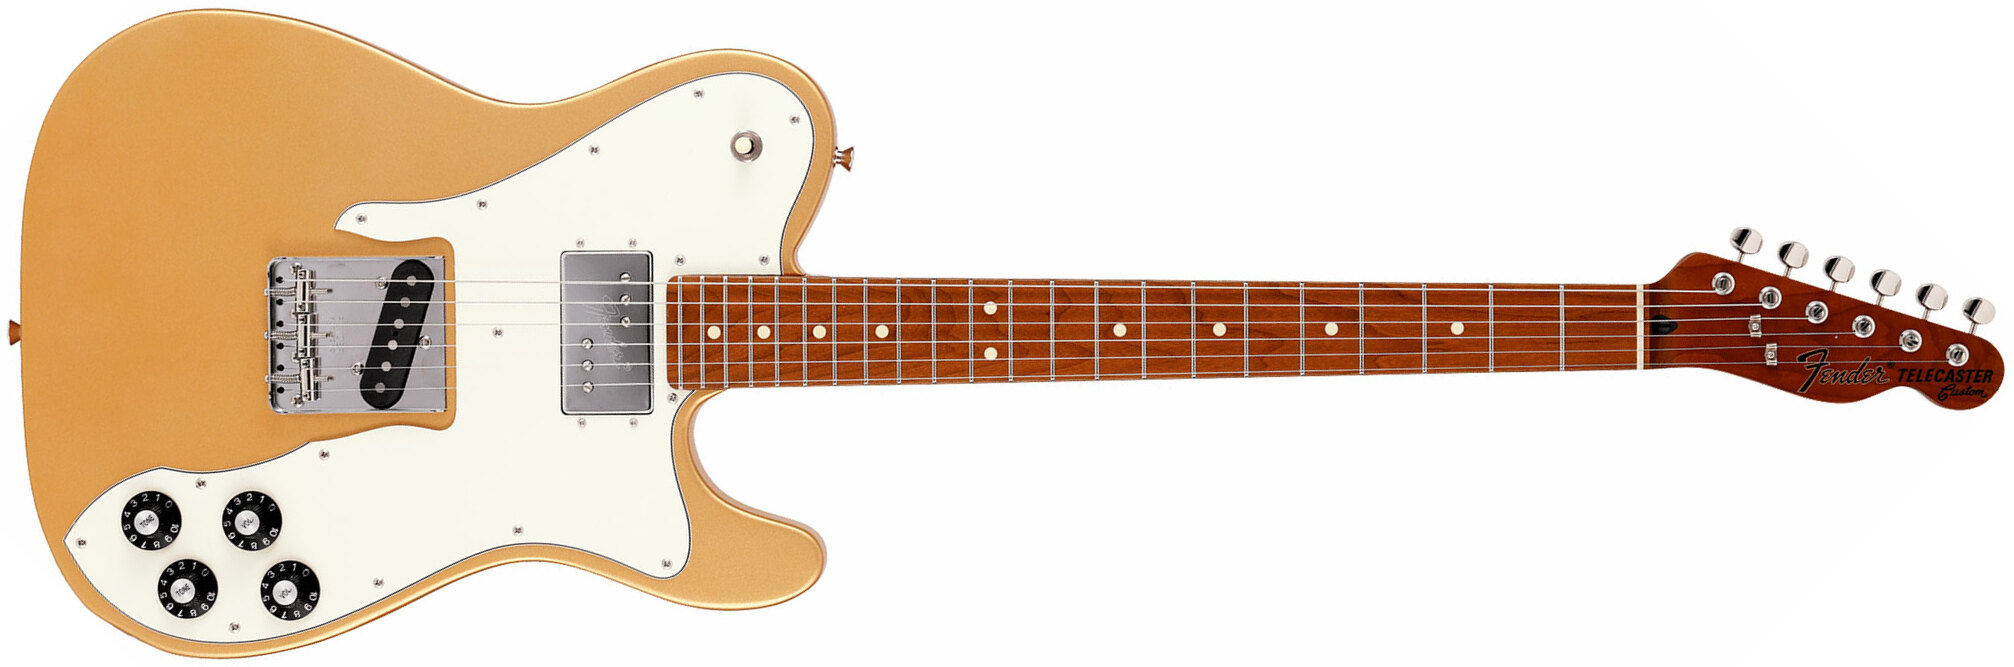 Fender Tele Hybrid Custom Jap Ltd Ht Hs Mn - Gold - Guitarra eléctrica con forma de tel - Main picture